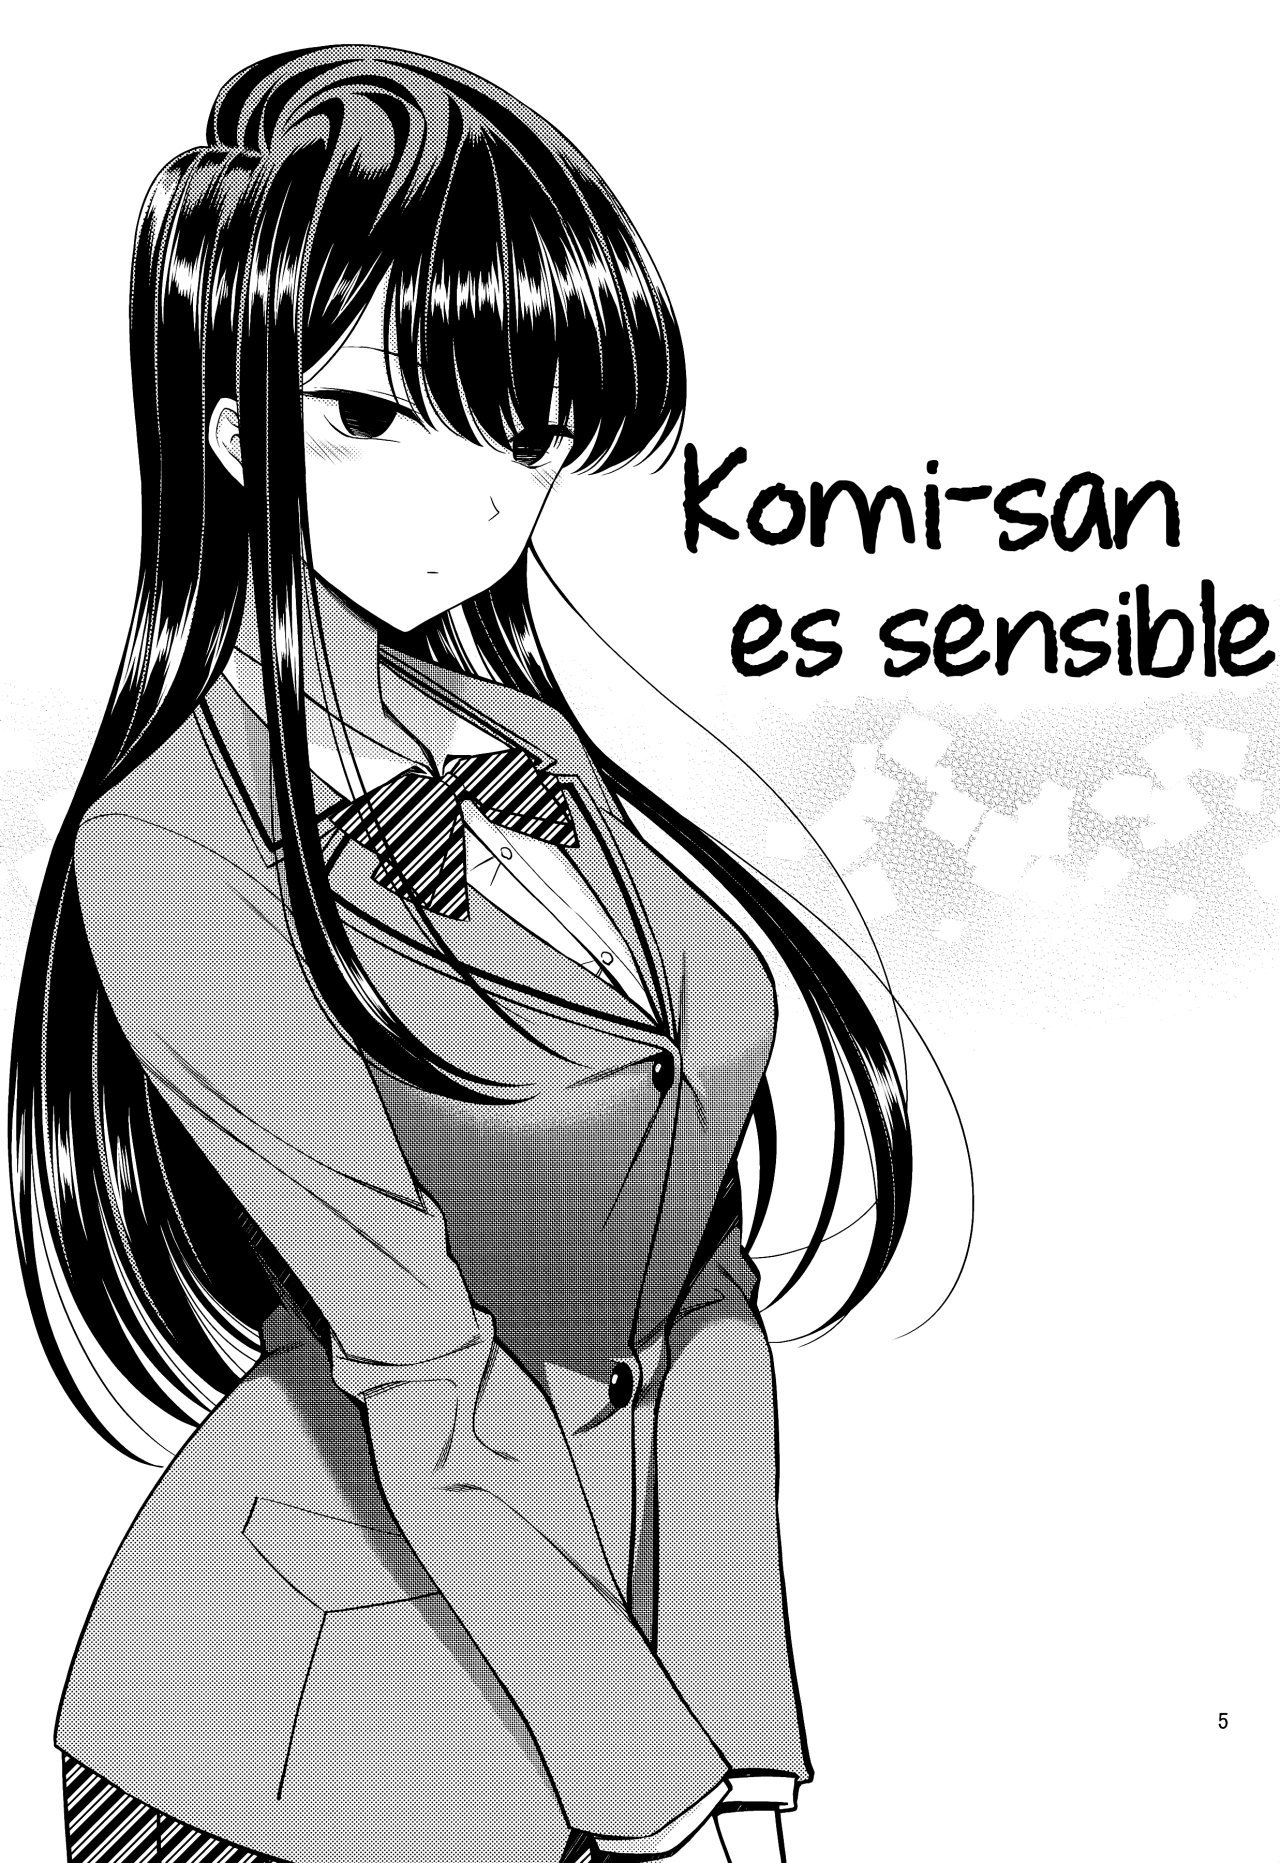 Komi-san es sensible - 3